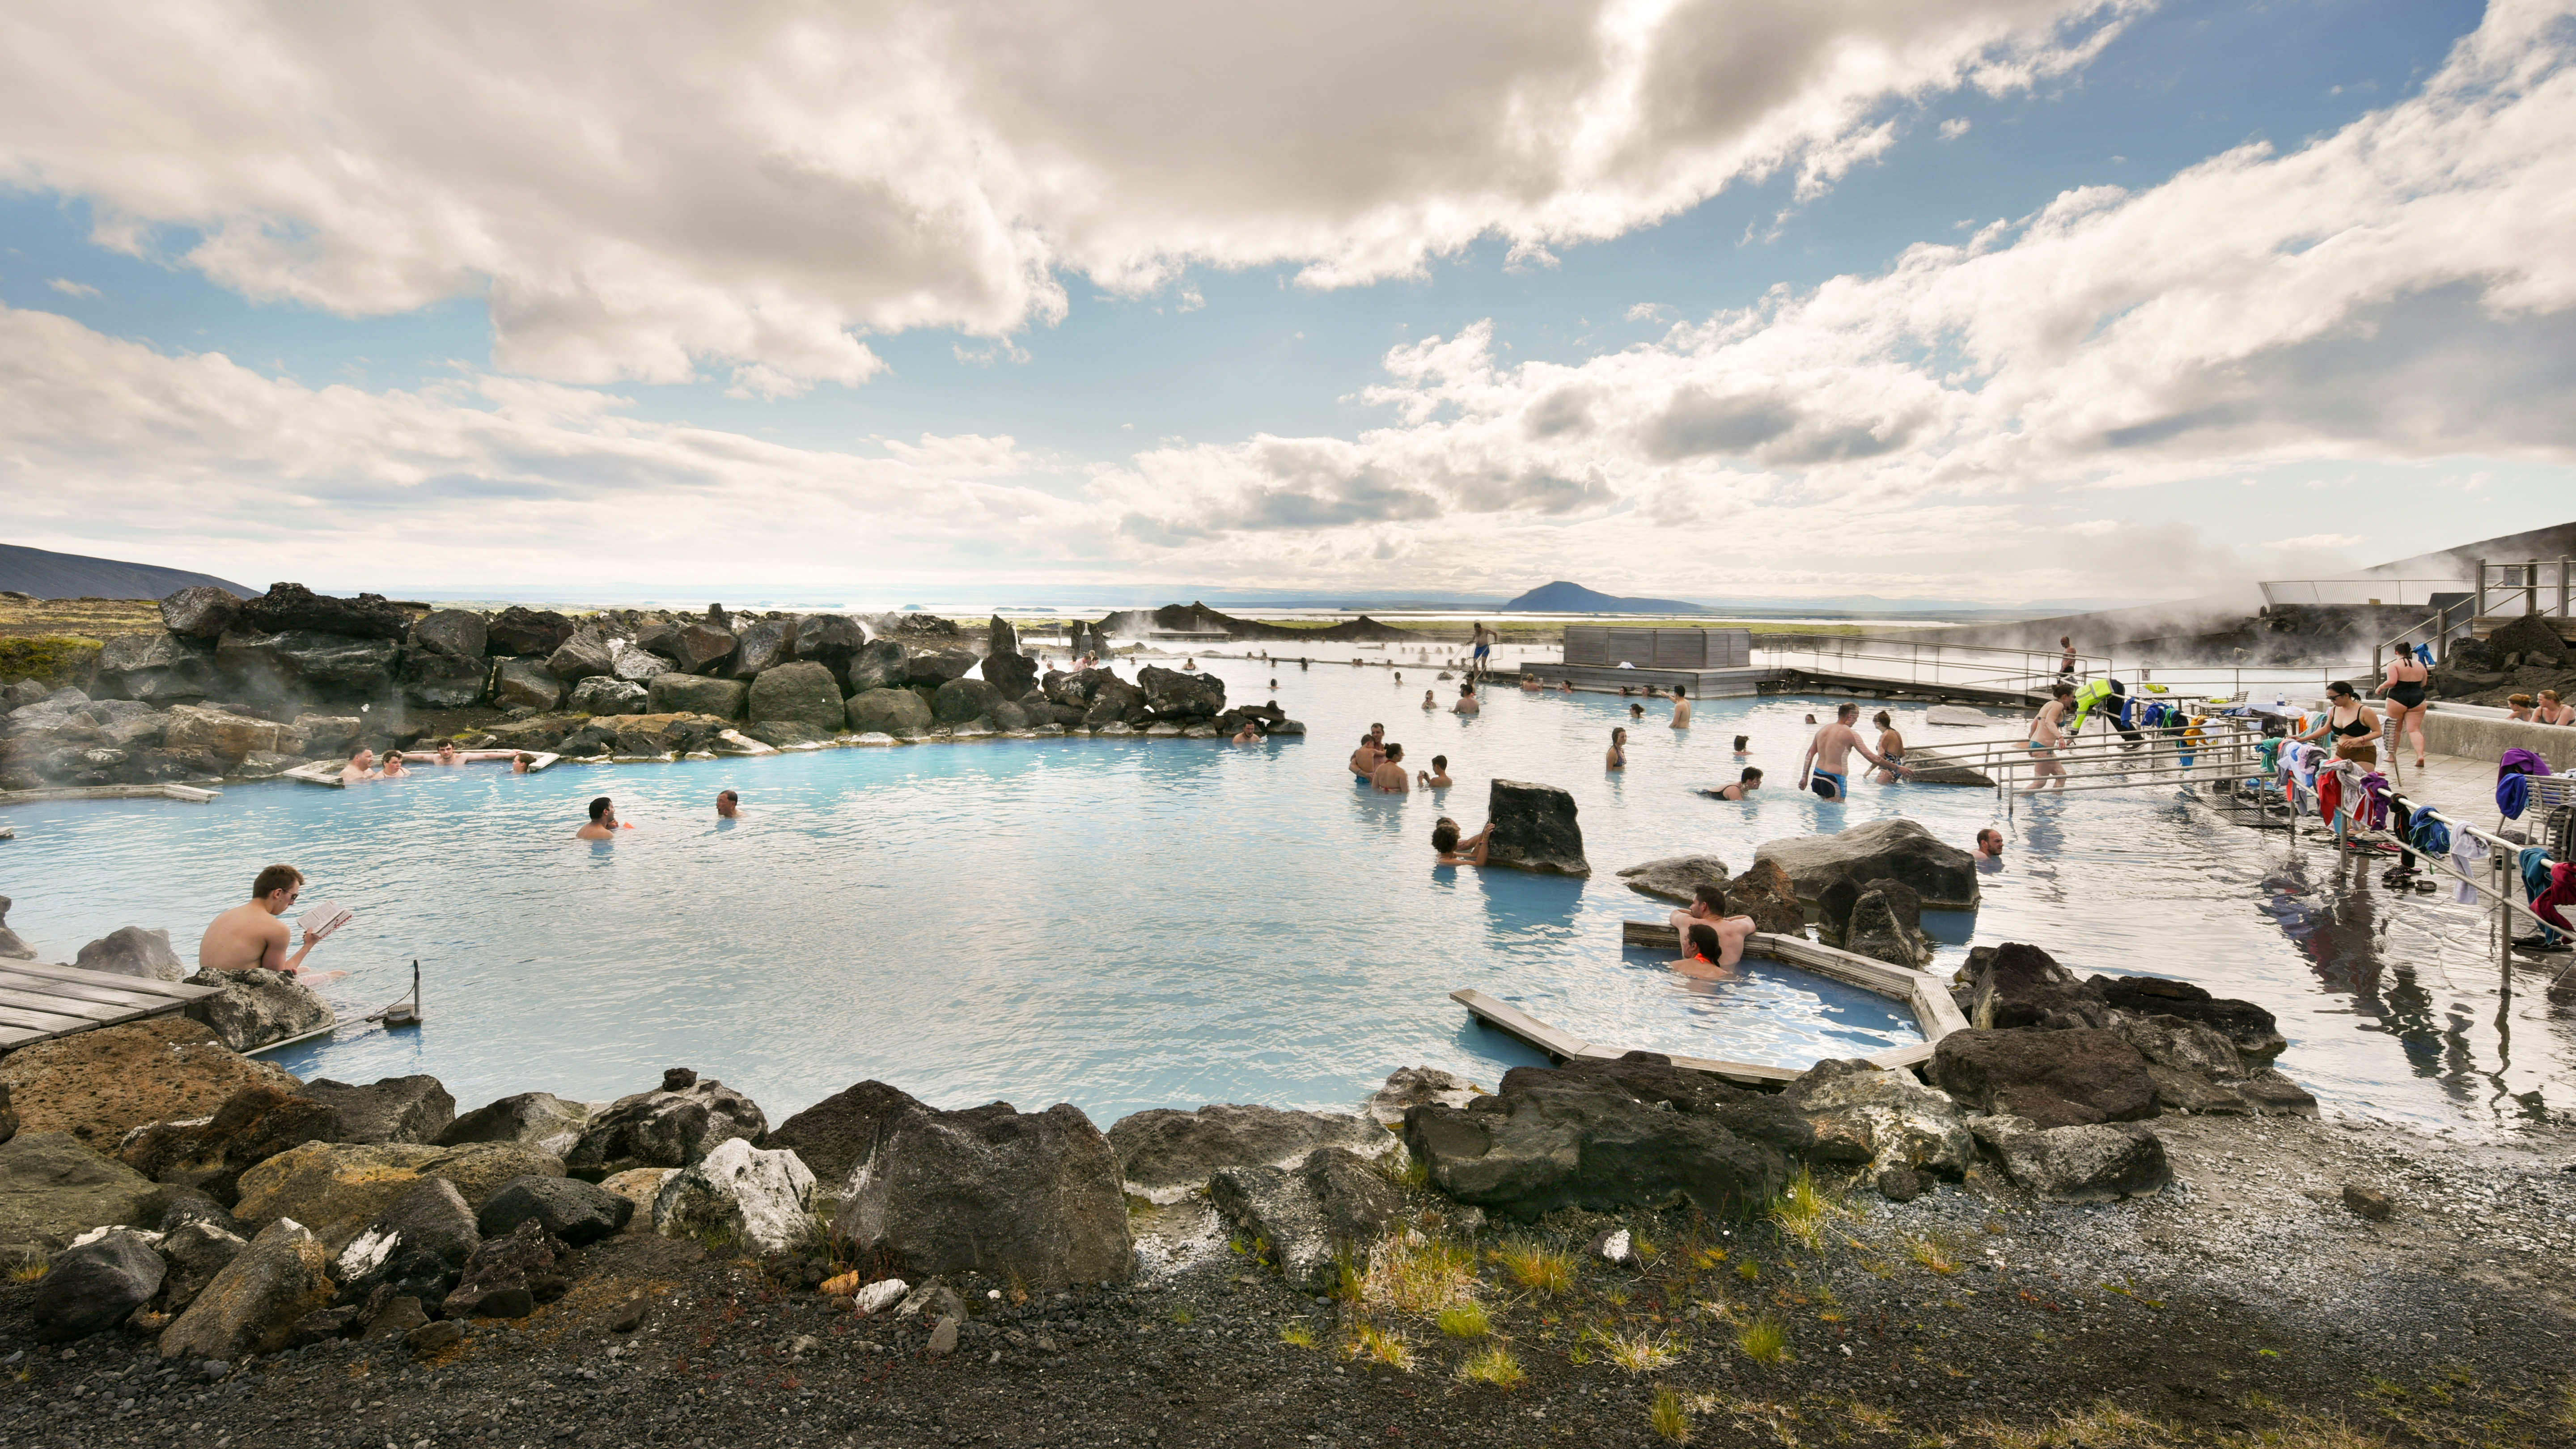 Tips for Visiting Icelands Hot Springs by Rick Steves